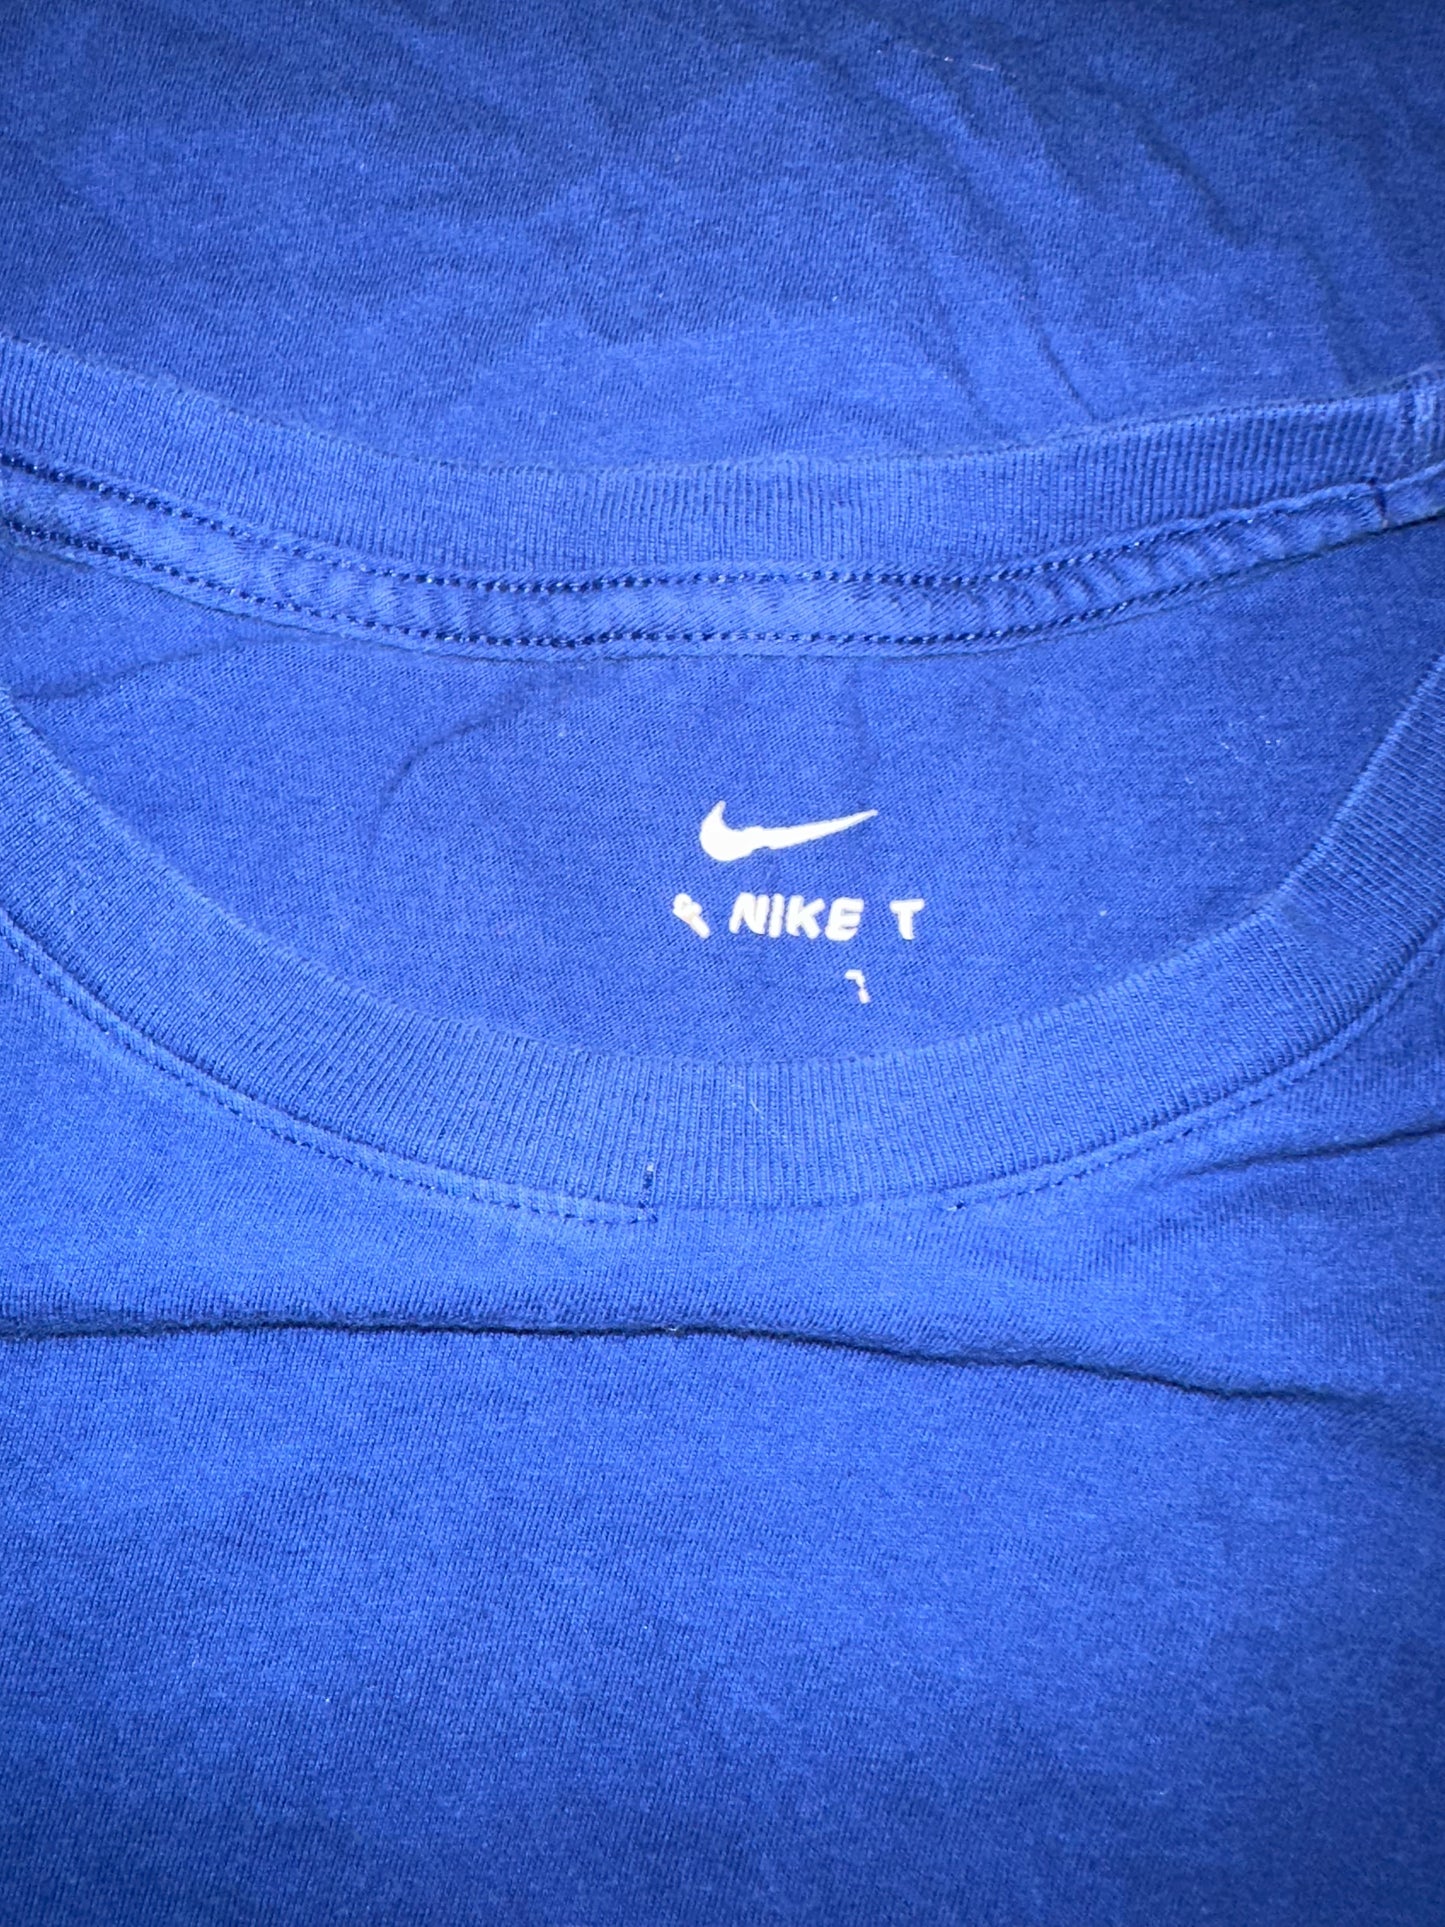 The Nike Tee - Royal Blue T-shirt